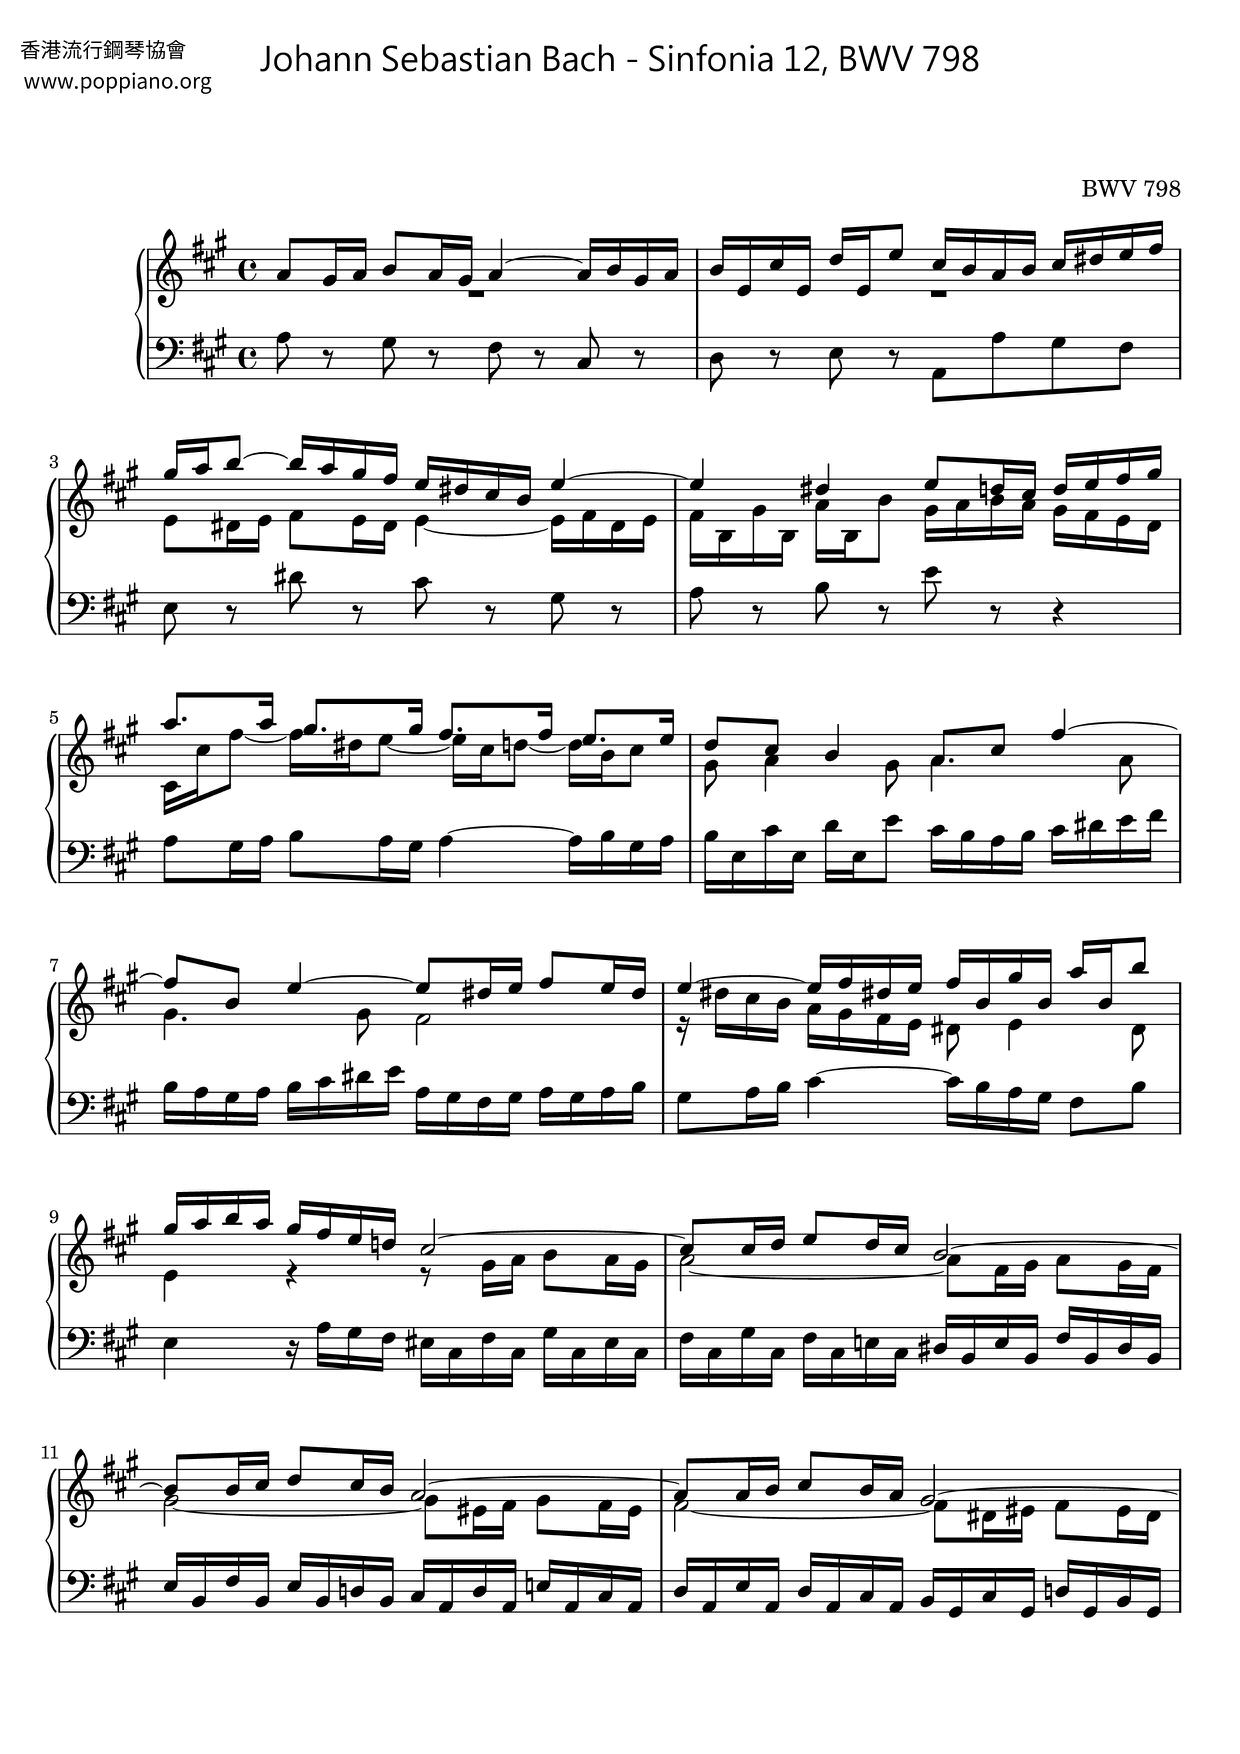 Sinfonia 12, BWV 798 Score